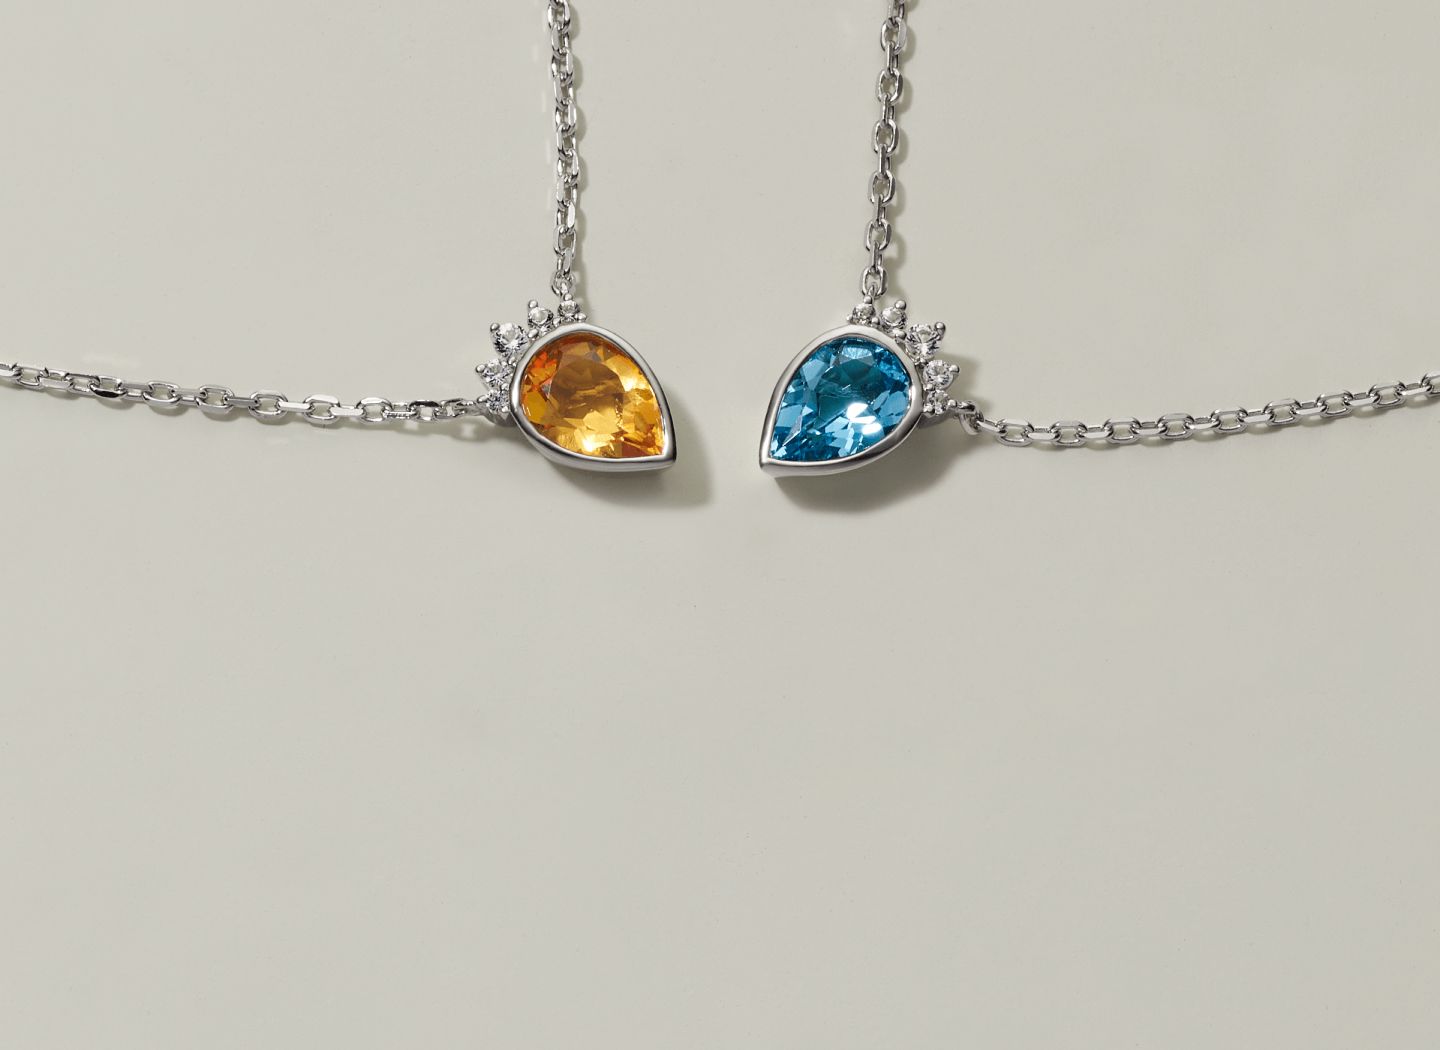 2 gemstone pendants of different colors